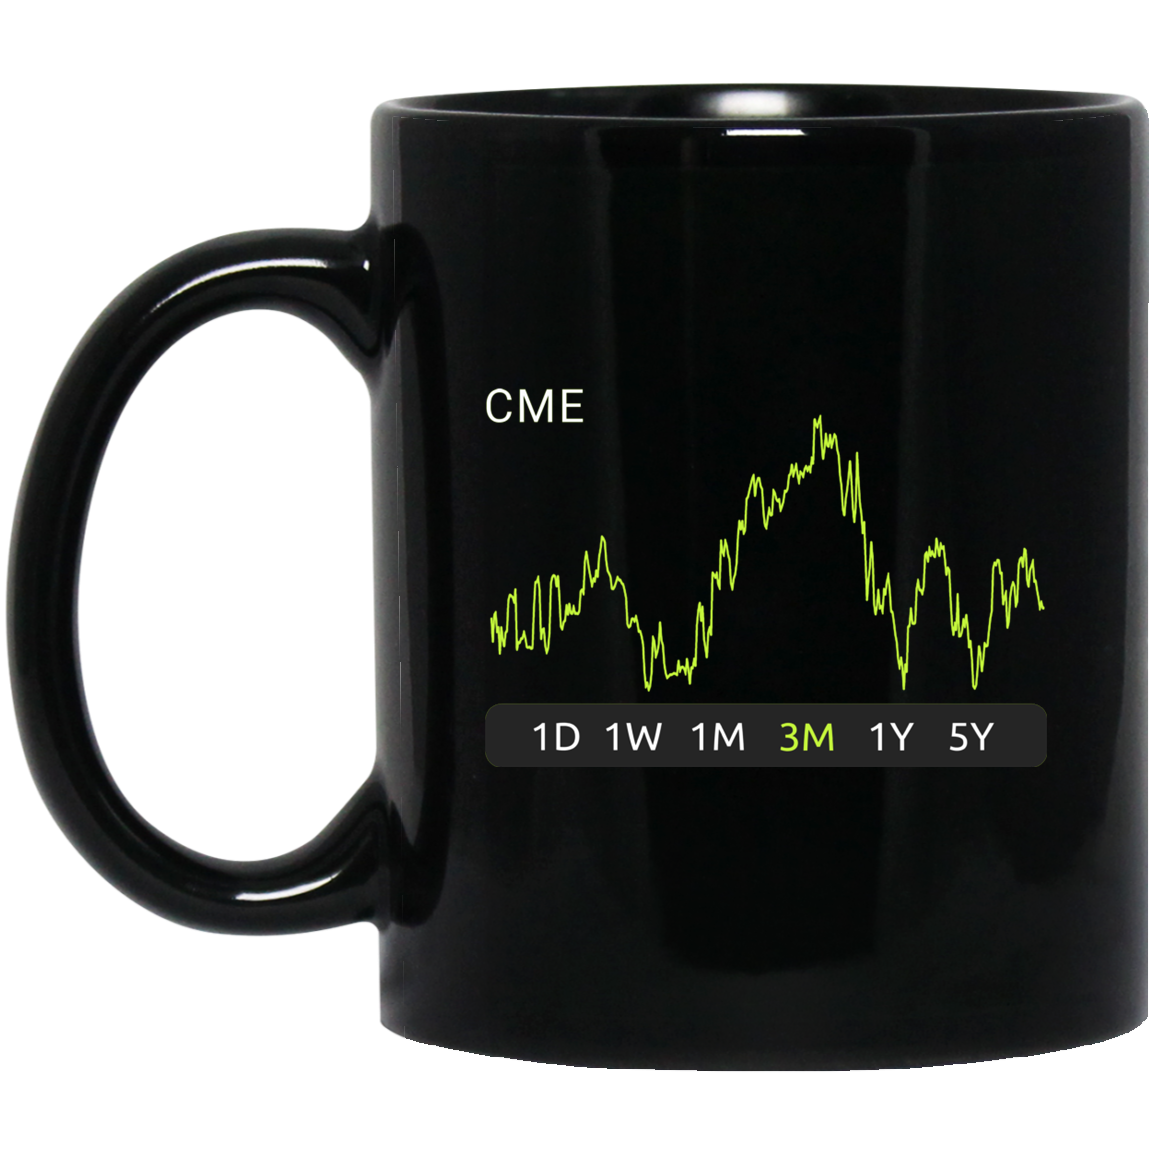 CME Stock 3m Mug